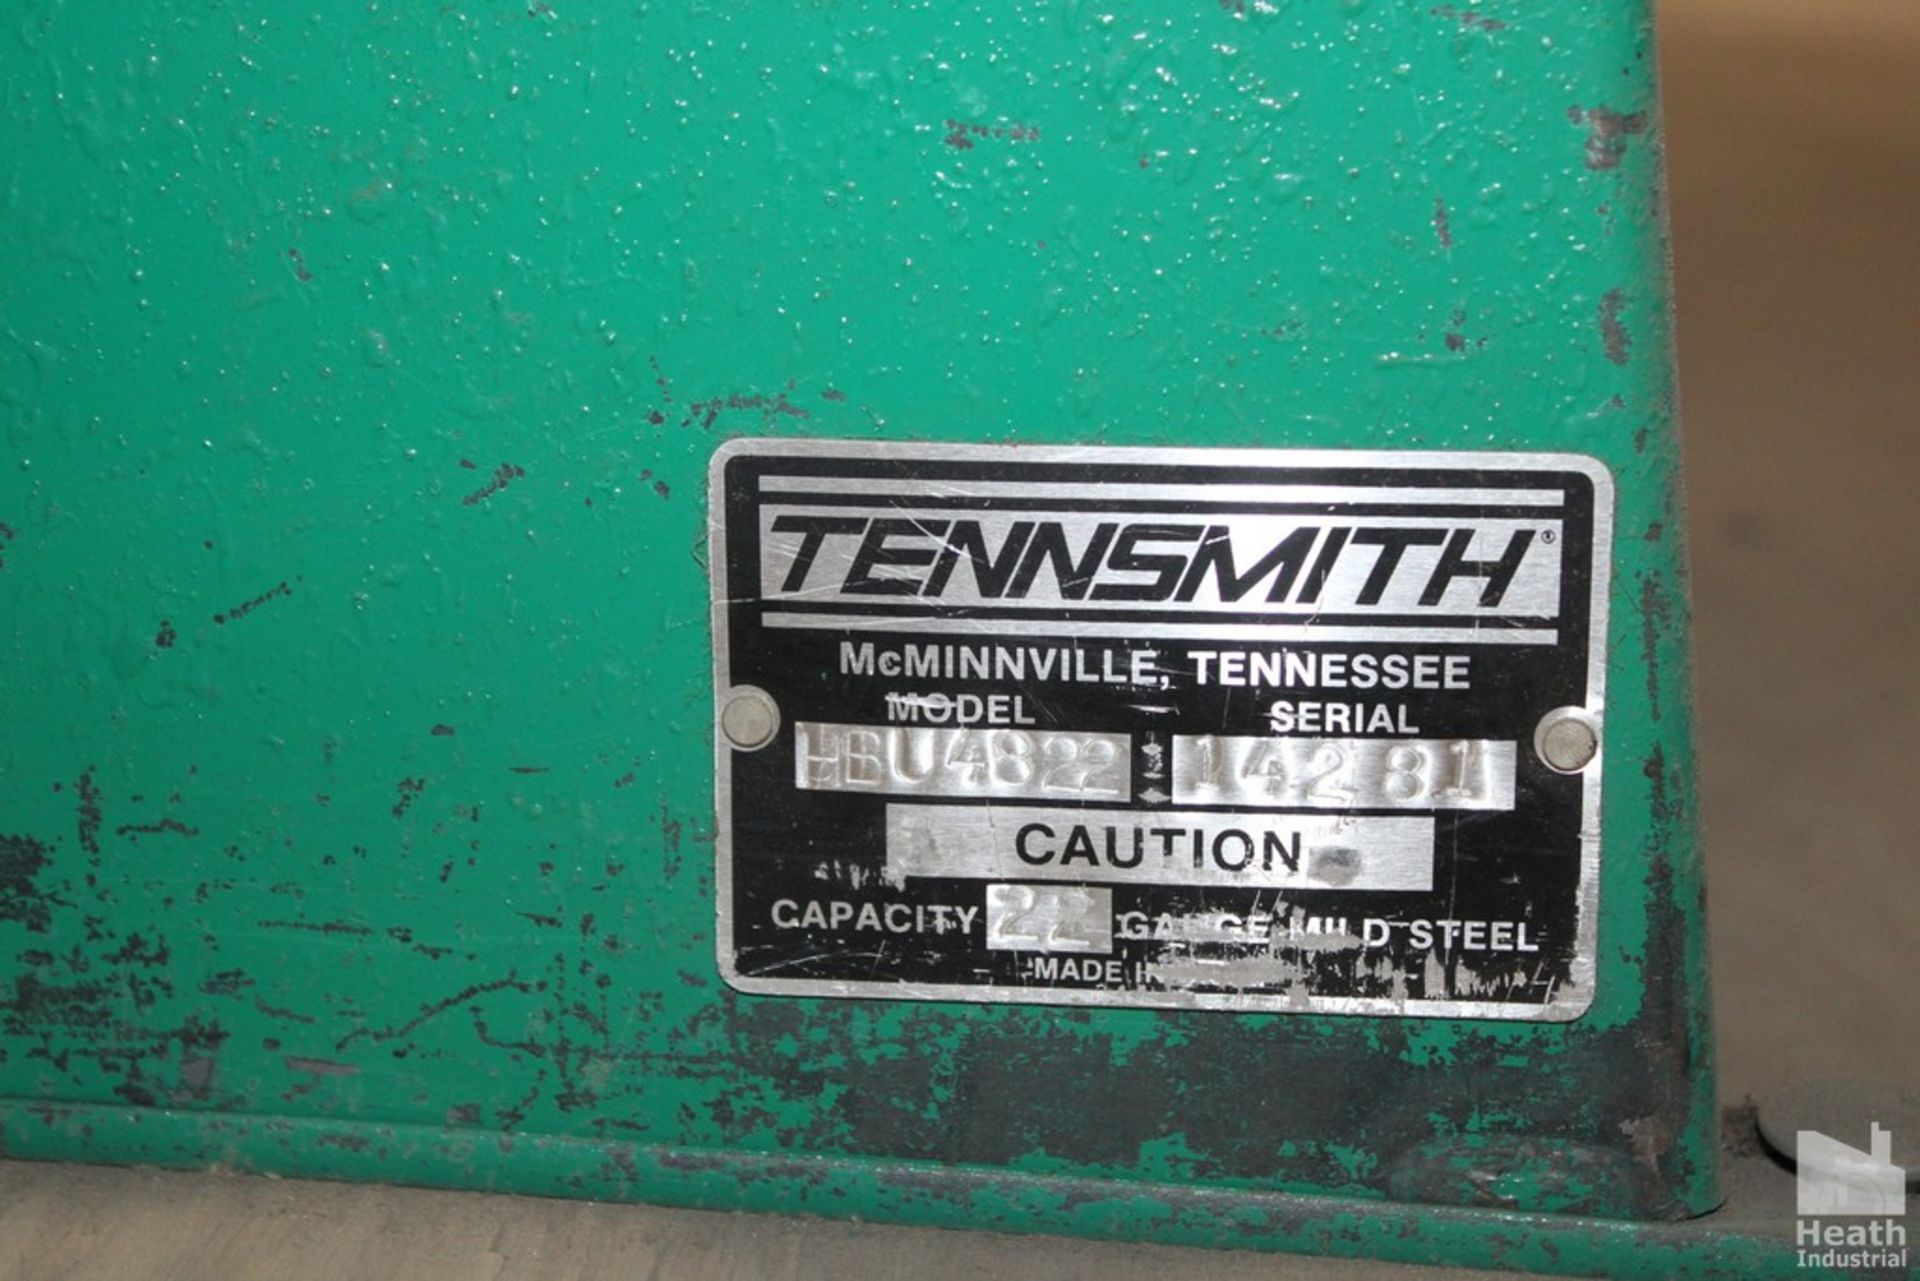 TENNSMITH 22 GAUGE X 48” MODEL HBU4822 BENCH FINGER BRAKE, S/N 14281 - Image 4 of 5